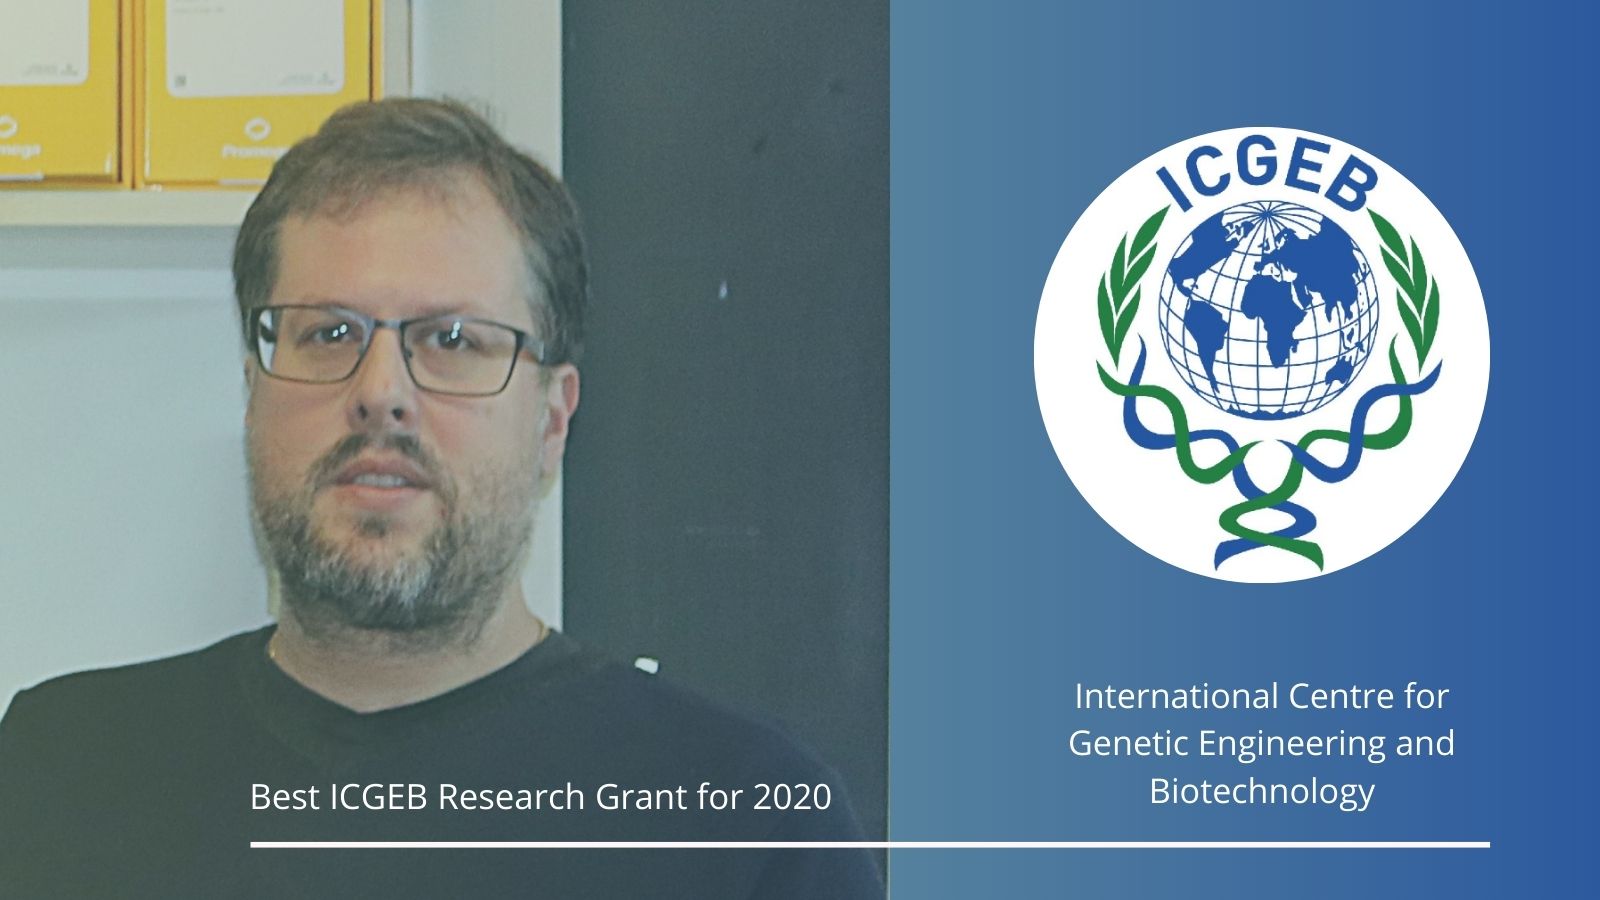 Međunarodno priznanje ICGEB-a dr. Tomaiću